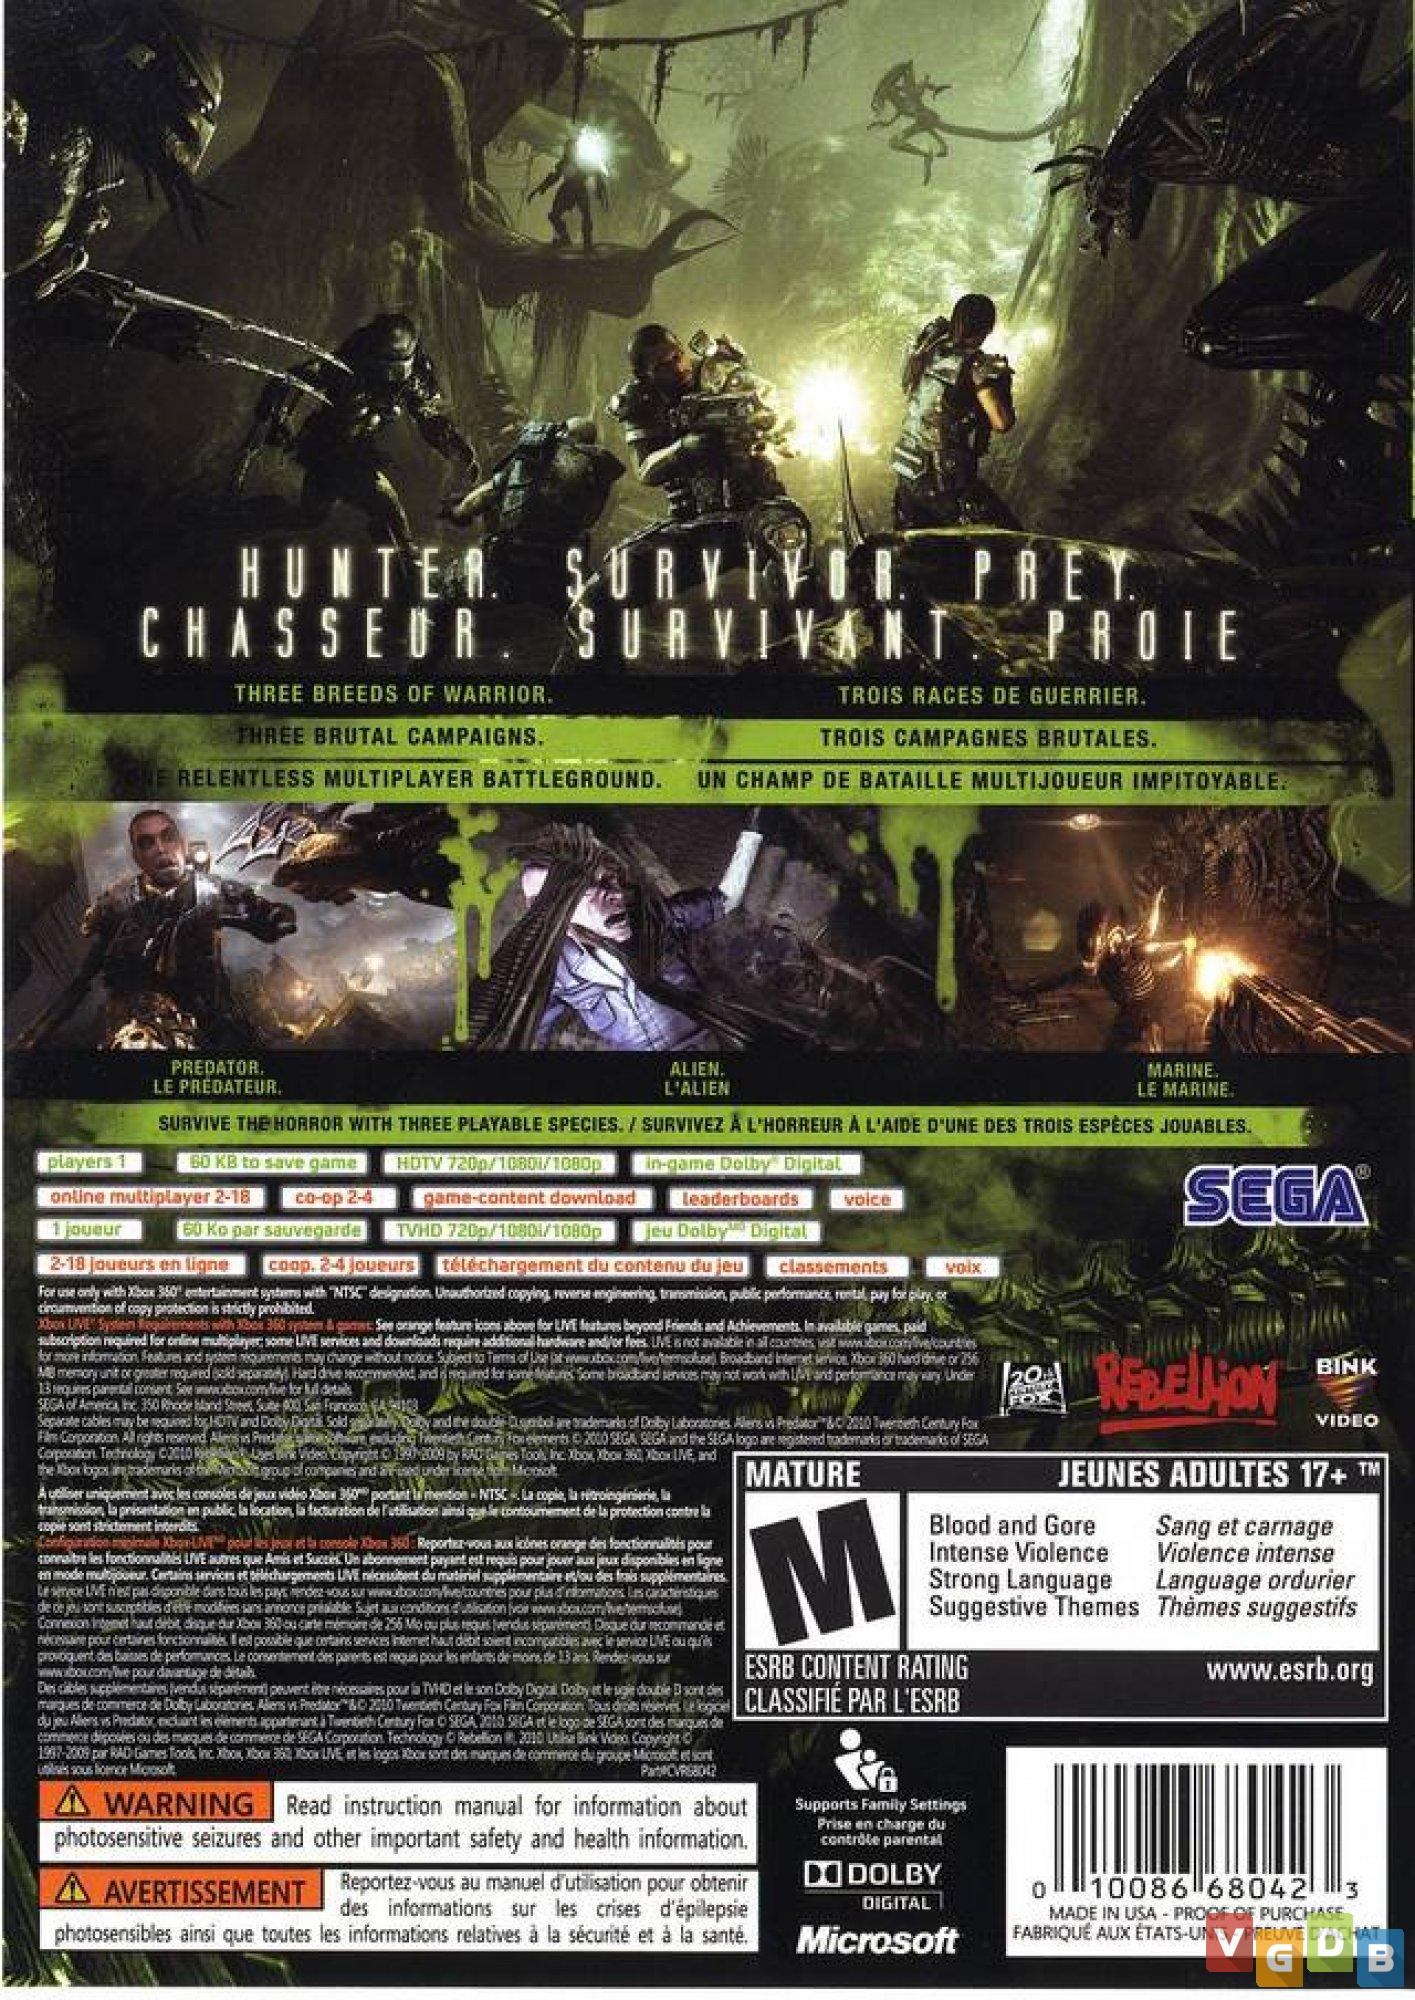 Alien Vs Predator Xbox360  Jogo de Videogame Xbox360 Usado